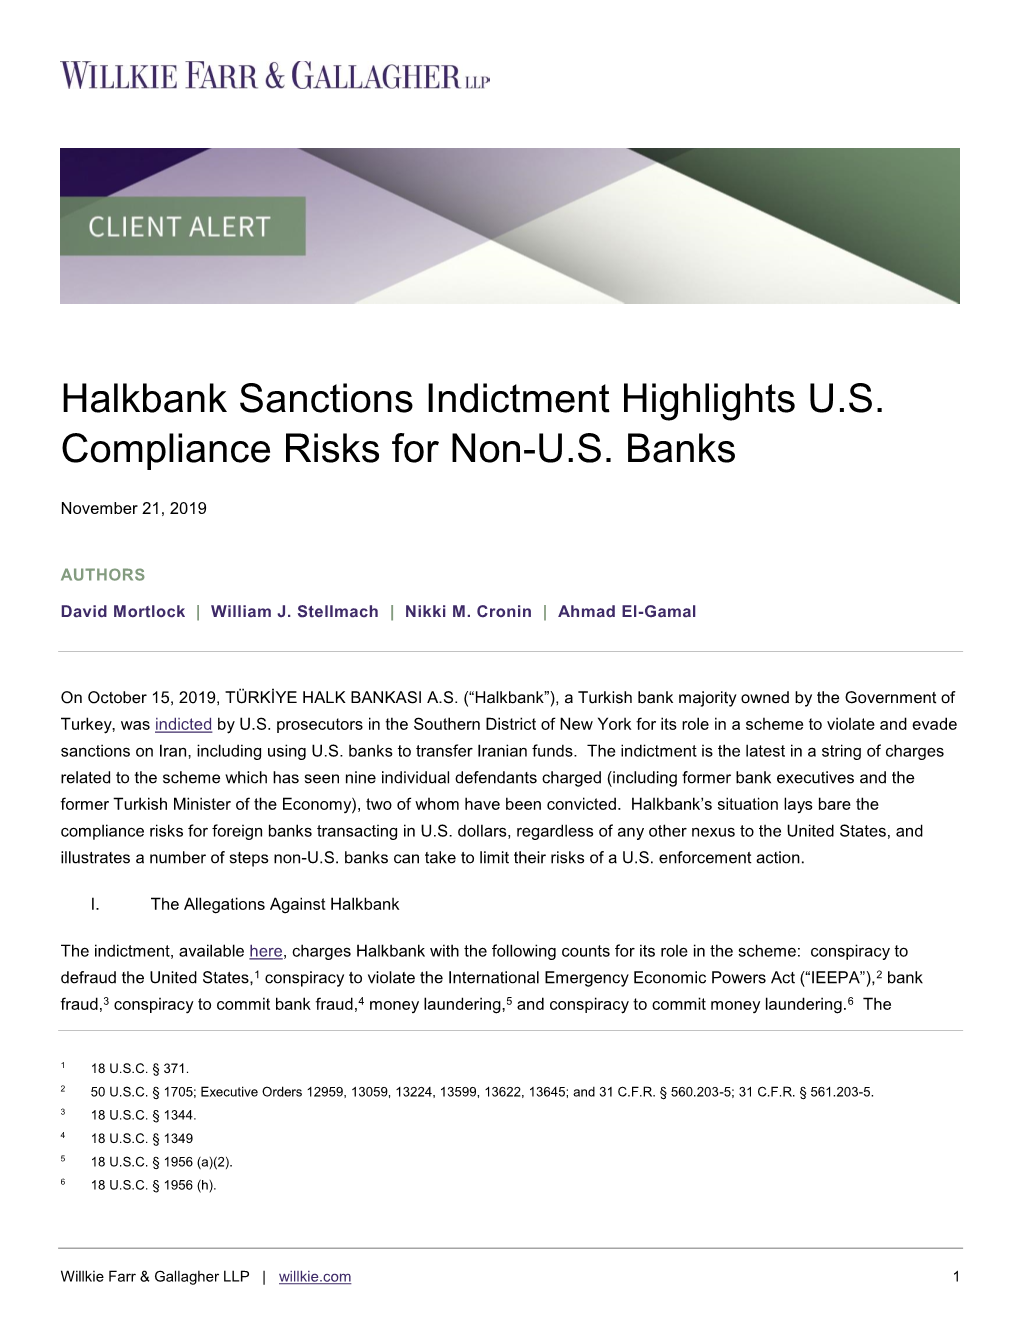 Halkbank Sanctions Indictment Highlights U.S. Compliance Risks for Non-U.S. Banks